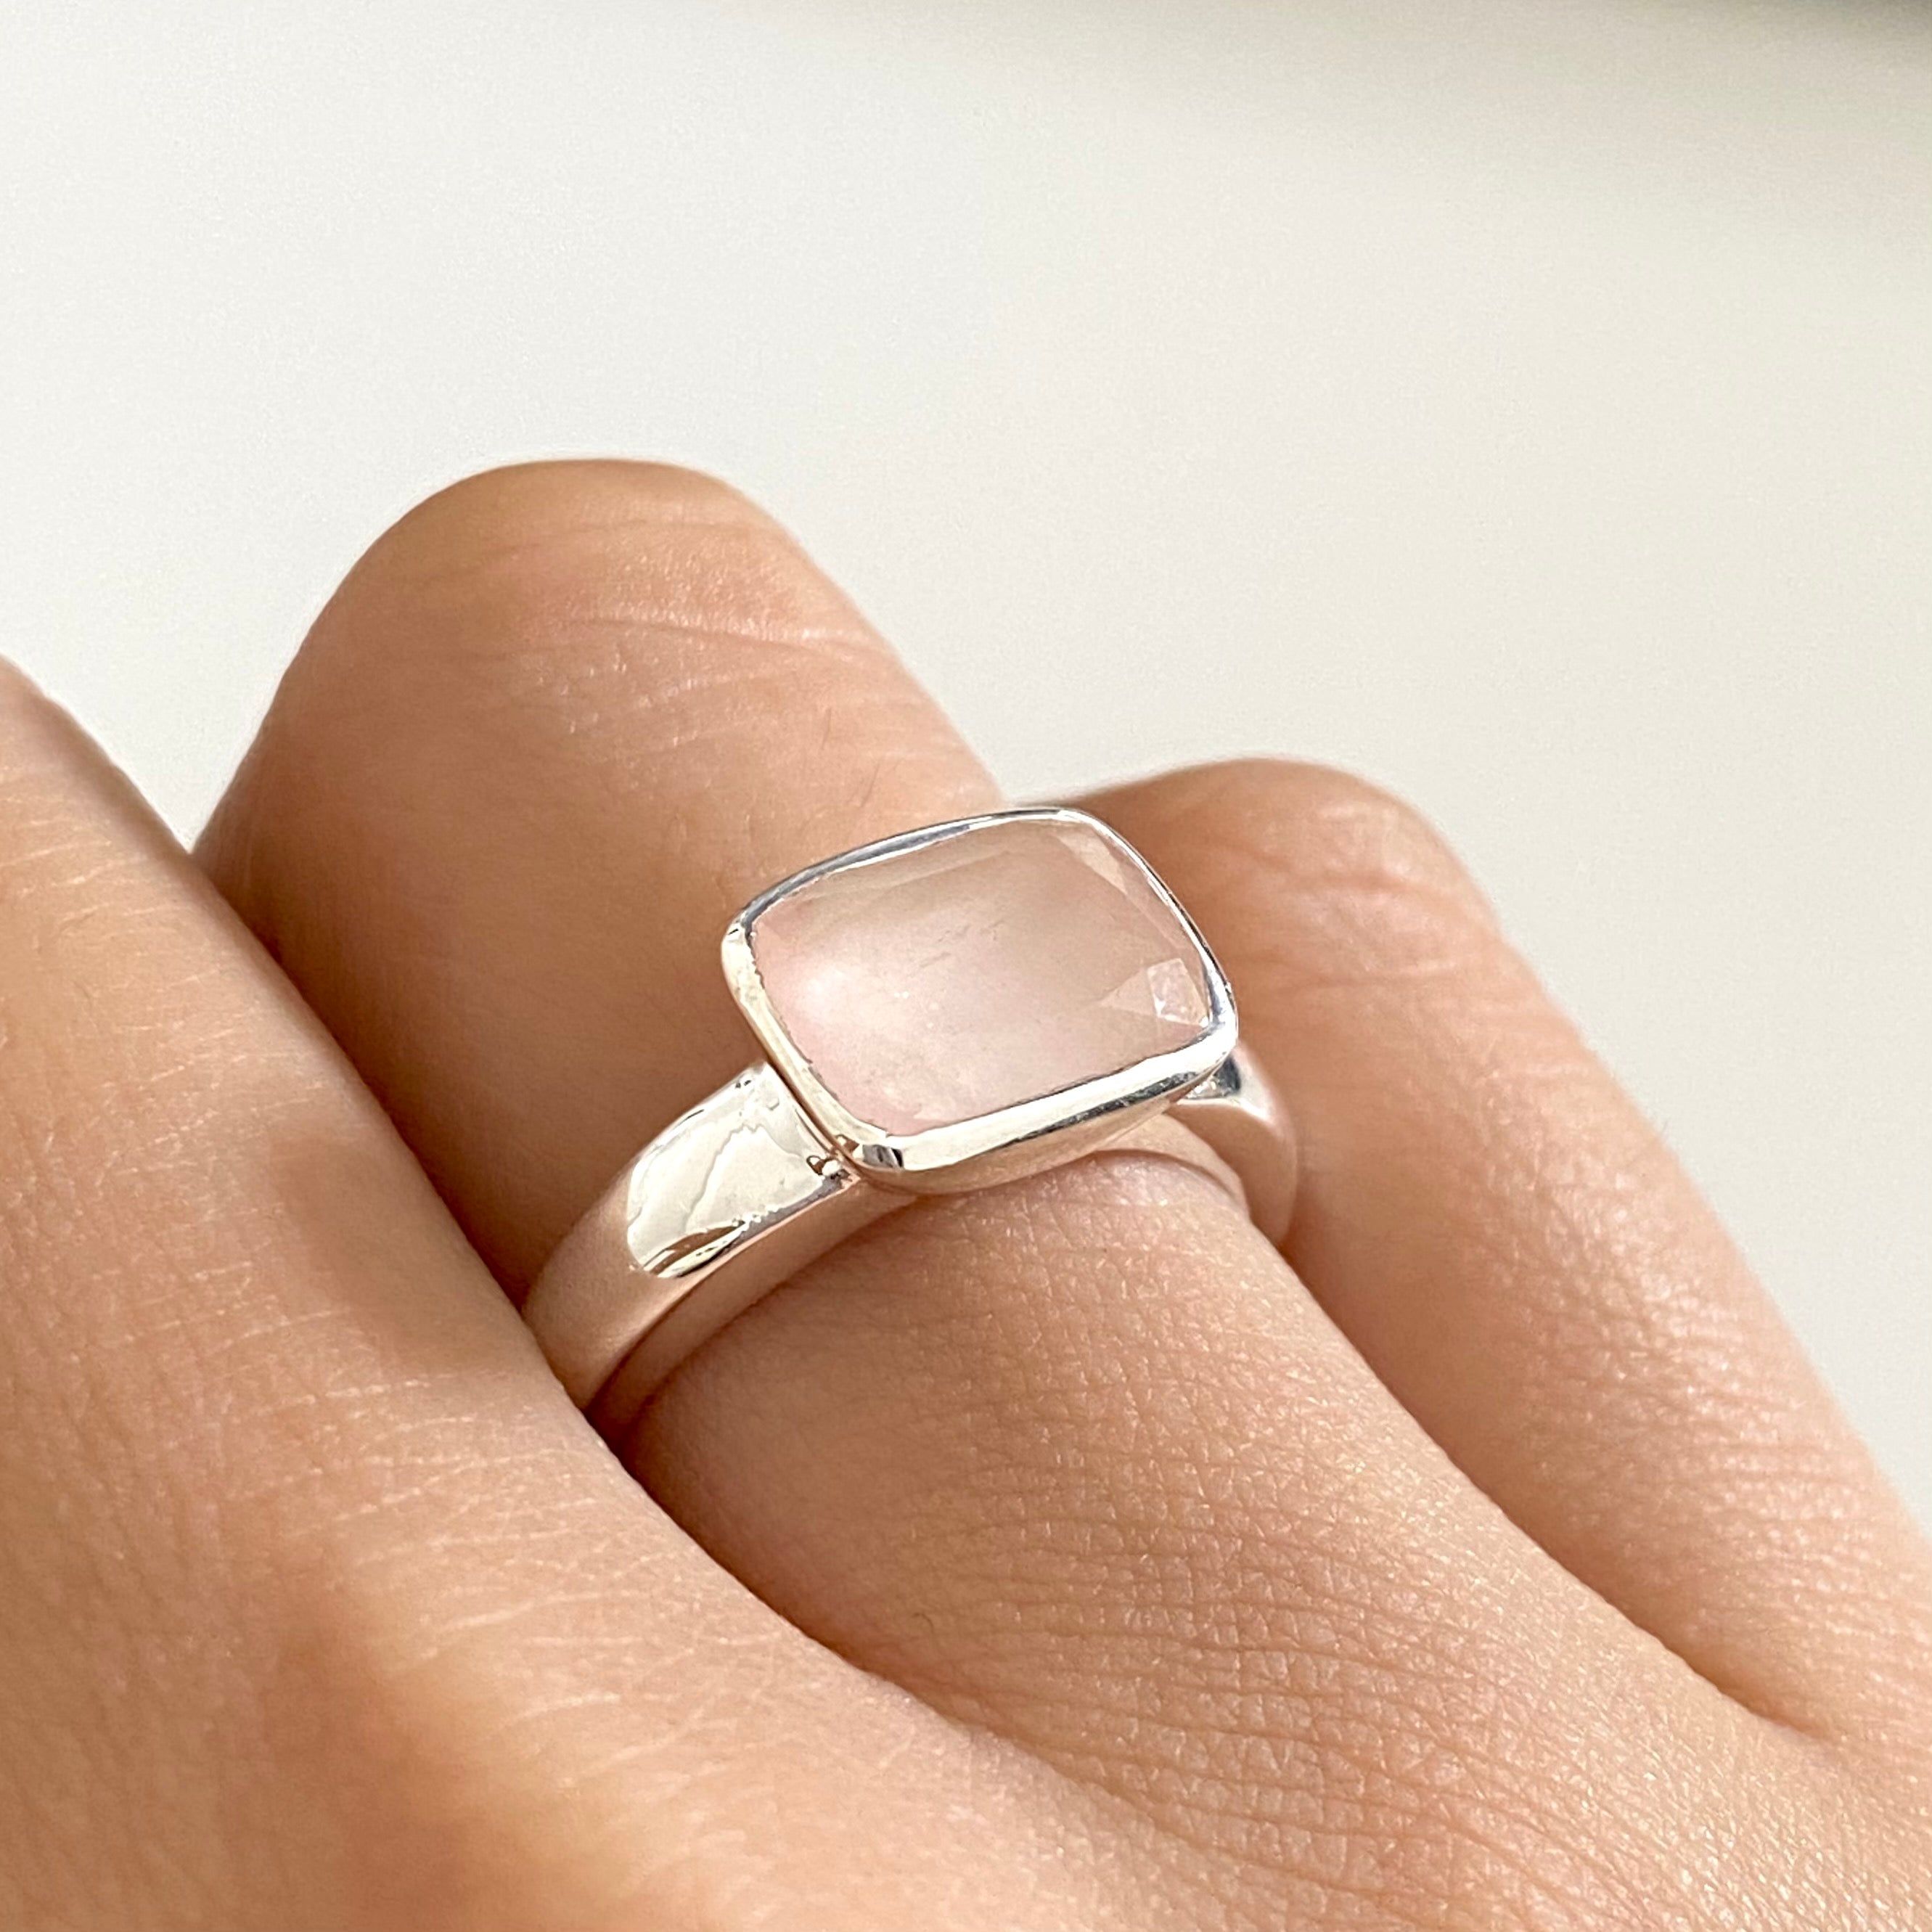 Faceted Rectangular Cut Natural Gemstone Sterling Silver Ring - Rose Quartz